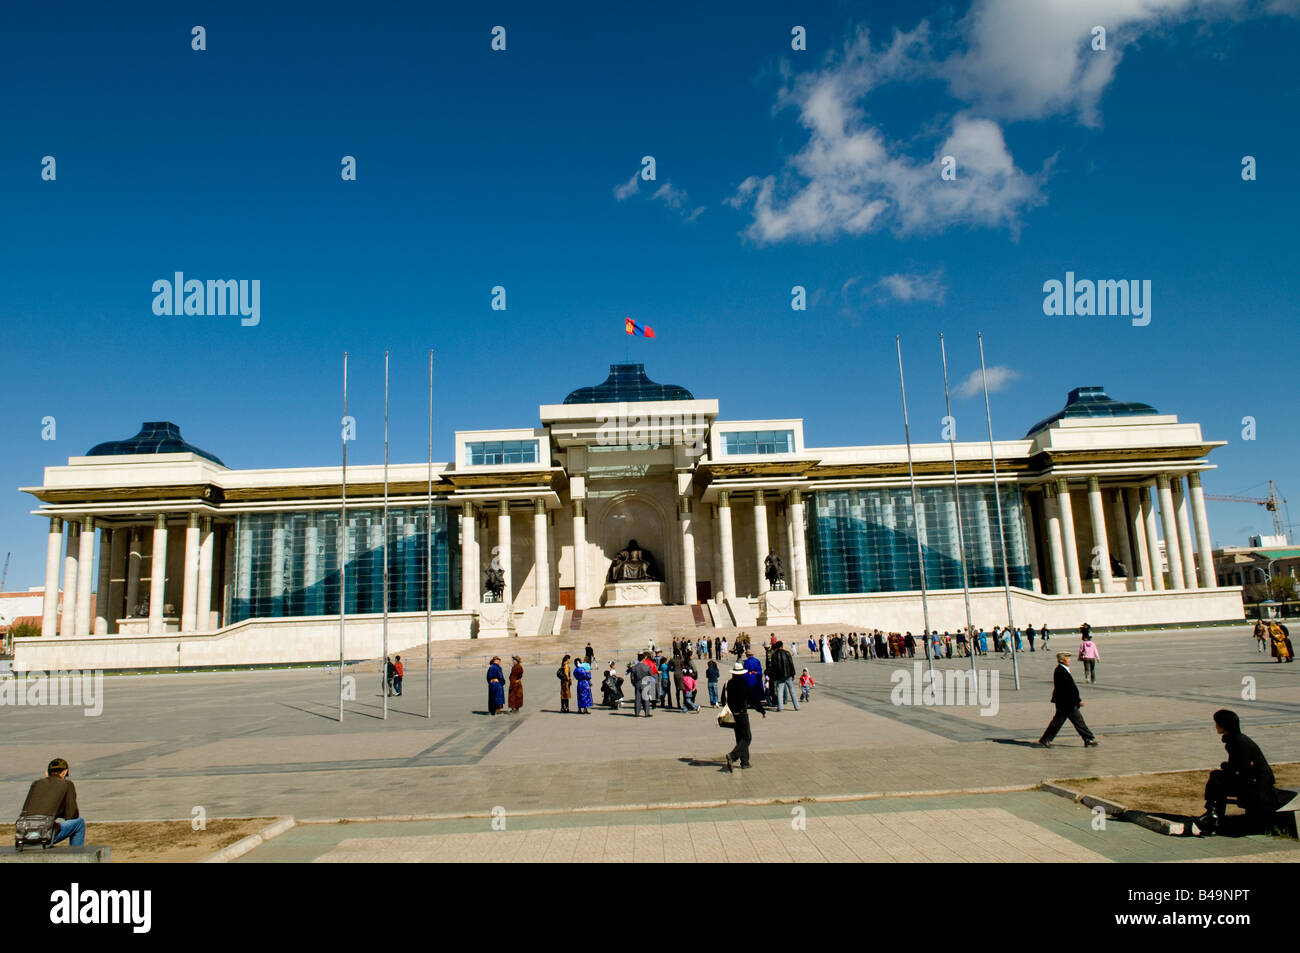 The Parliament building in Sukhbattar square in central Ulaan Battar, Mongolia Stock Photo